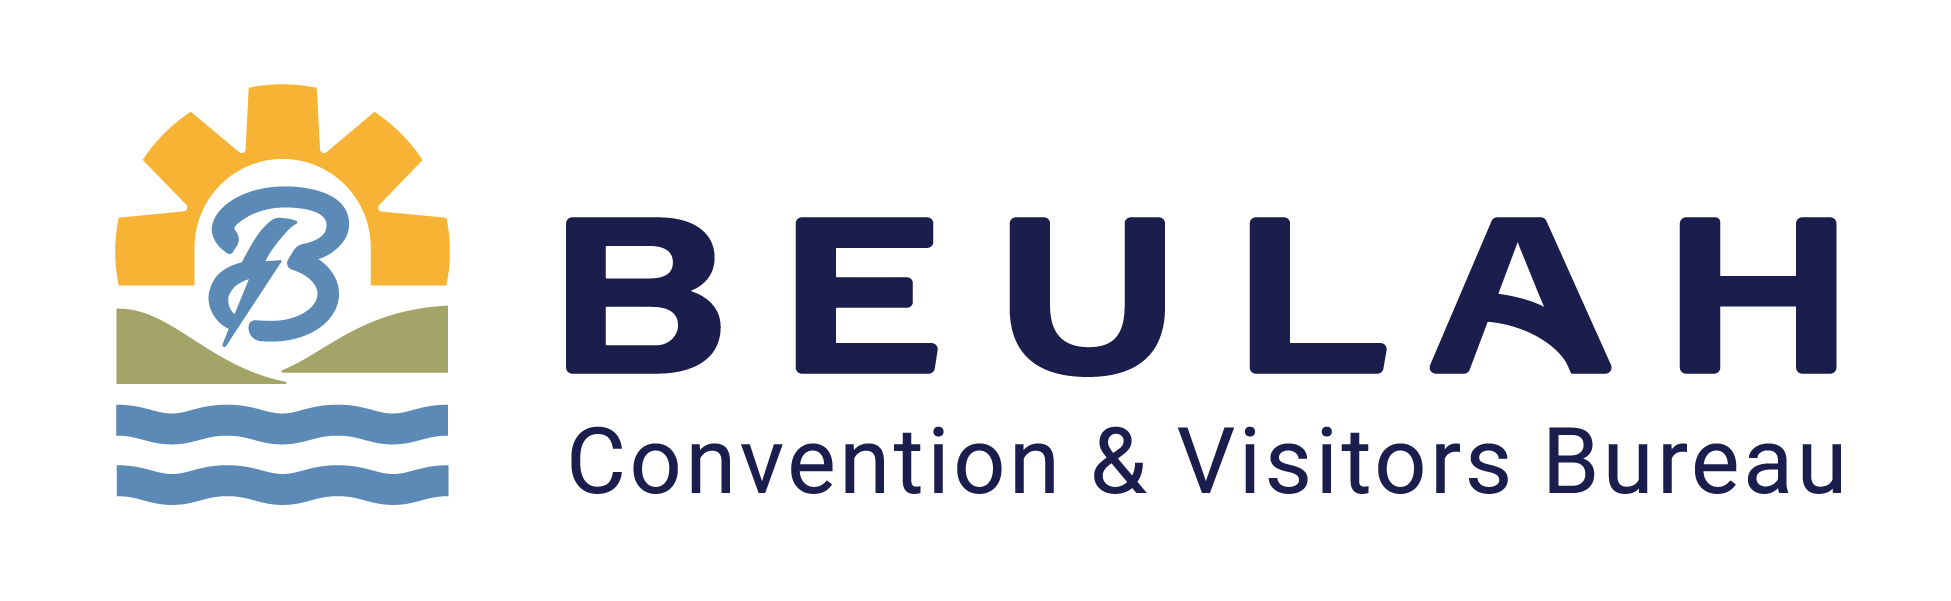 Beulah Convention & Visitors Bureau Logo